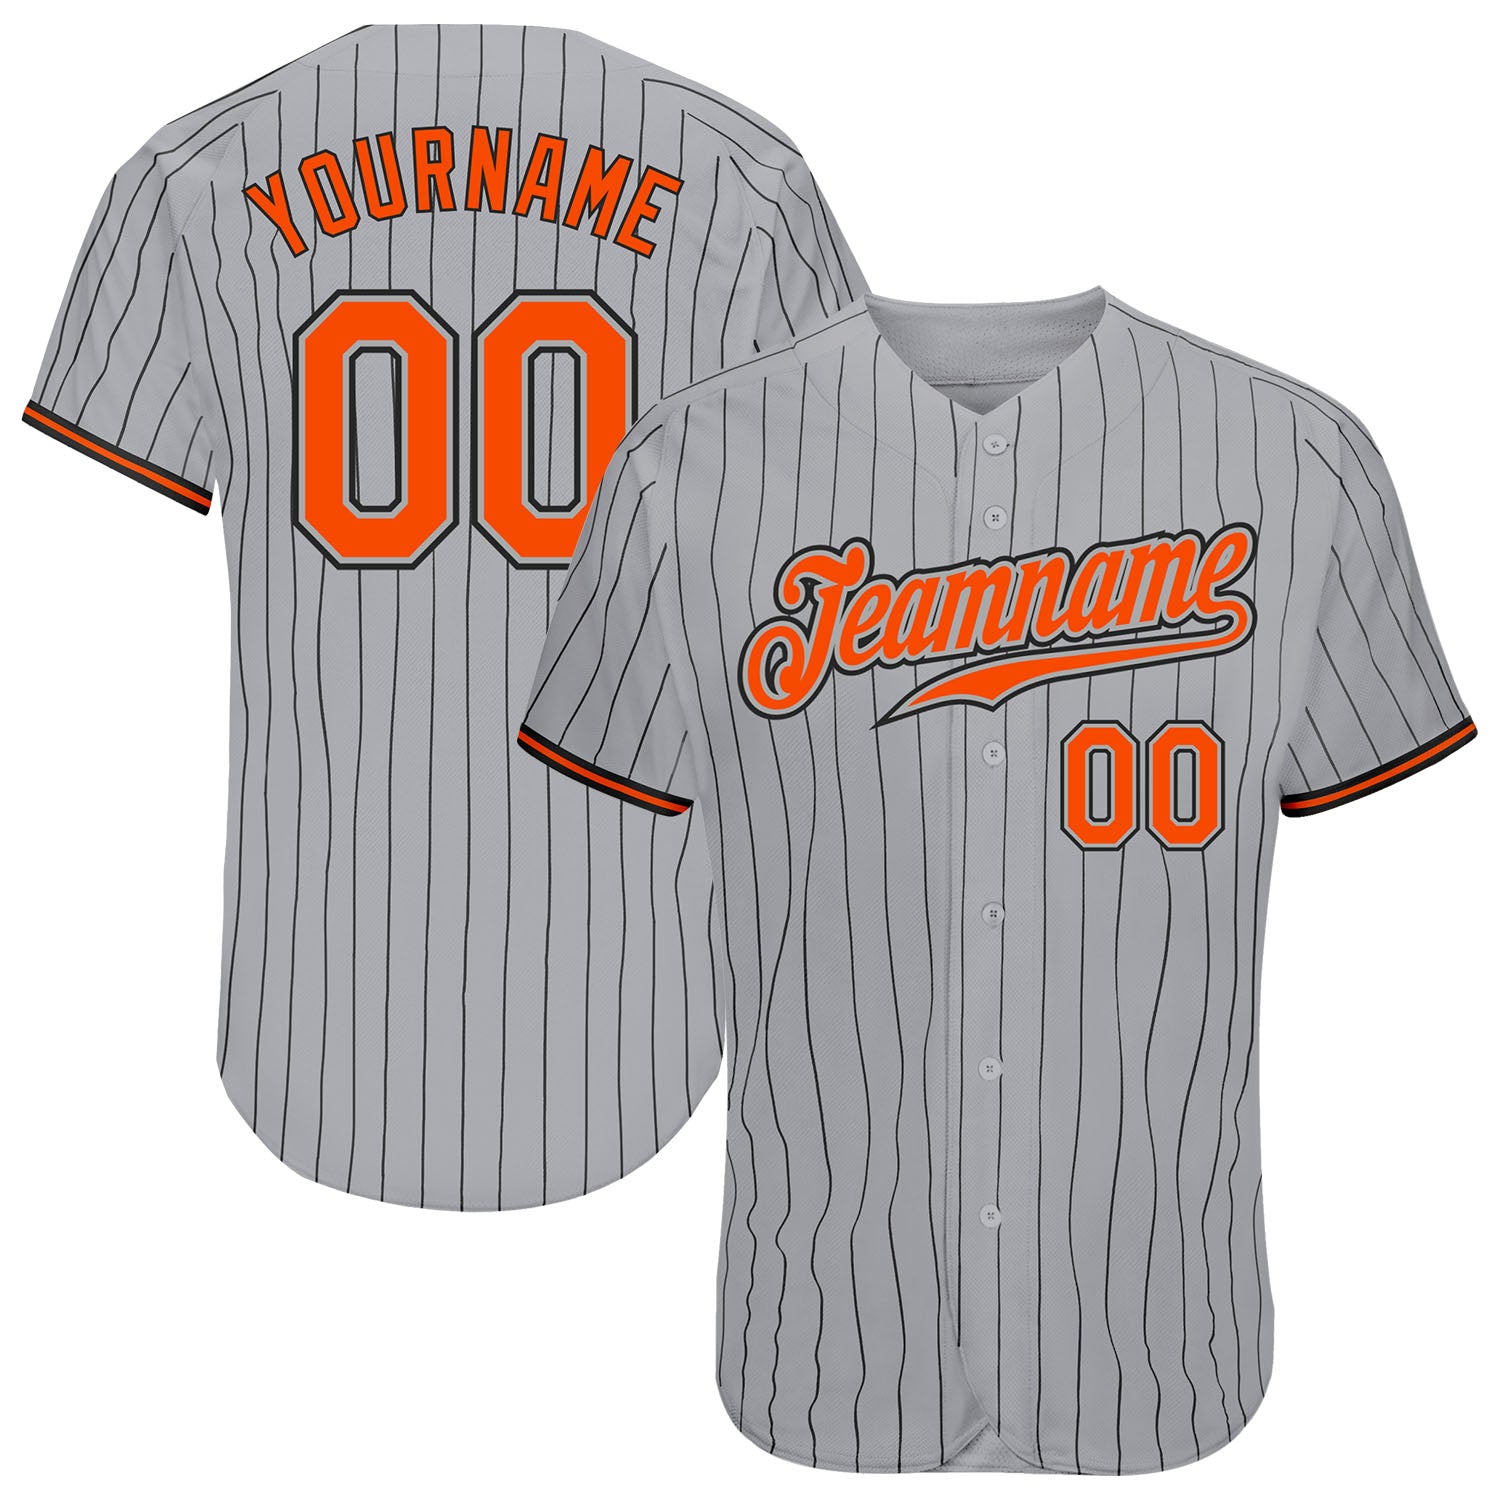 Custom Sublimation Orange Pinstripe Baseball Jersey  Baseball jersey  outfit, Custom baseball jersey, Baseball jerseys